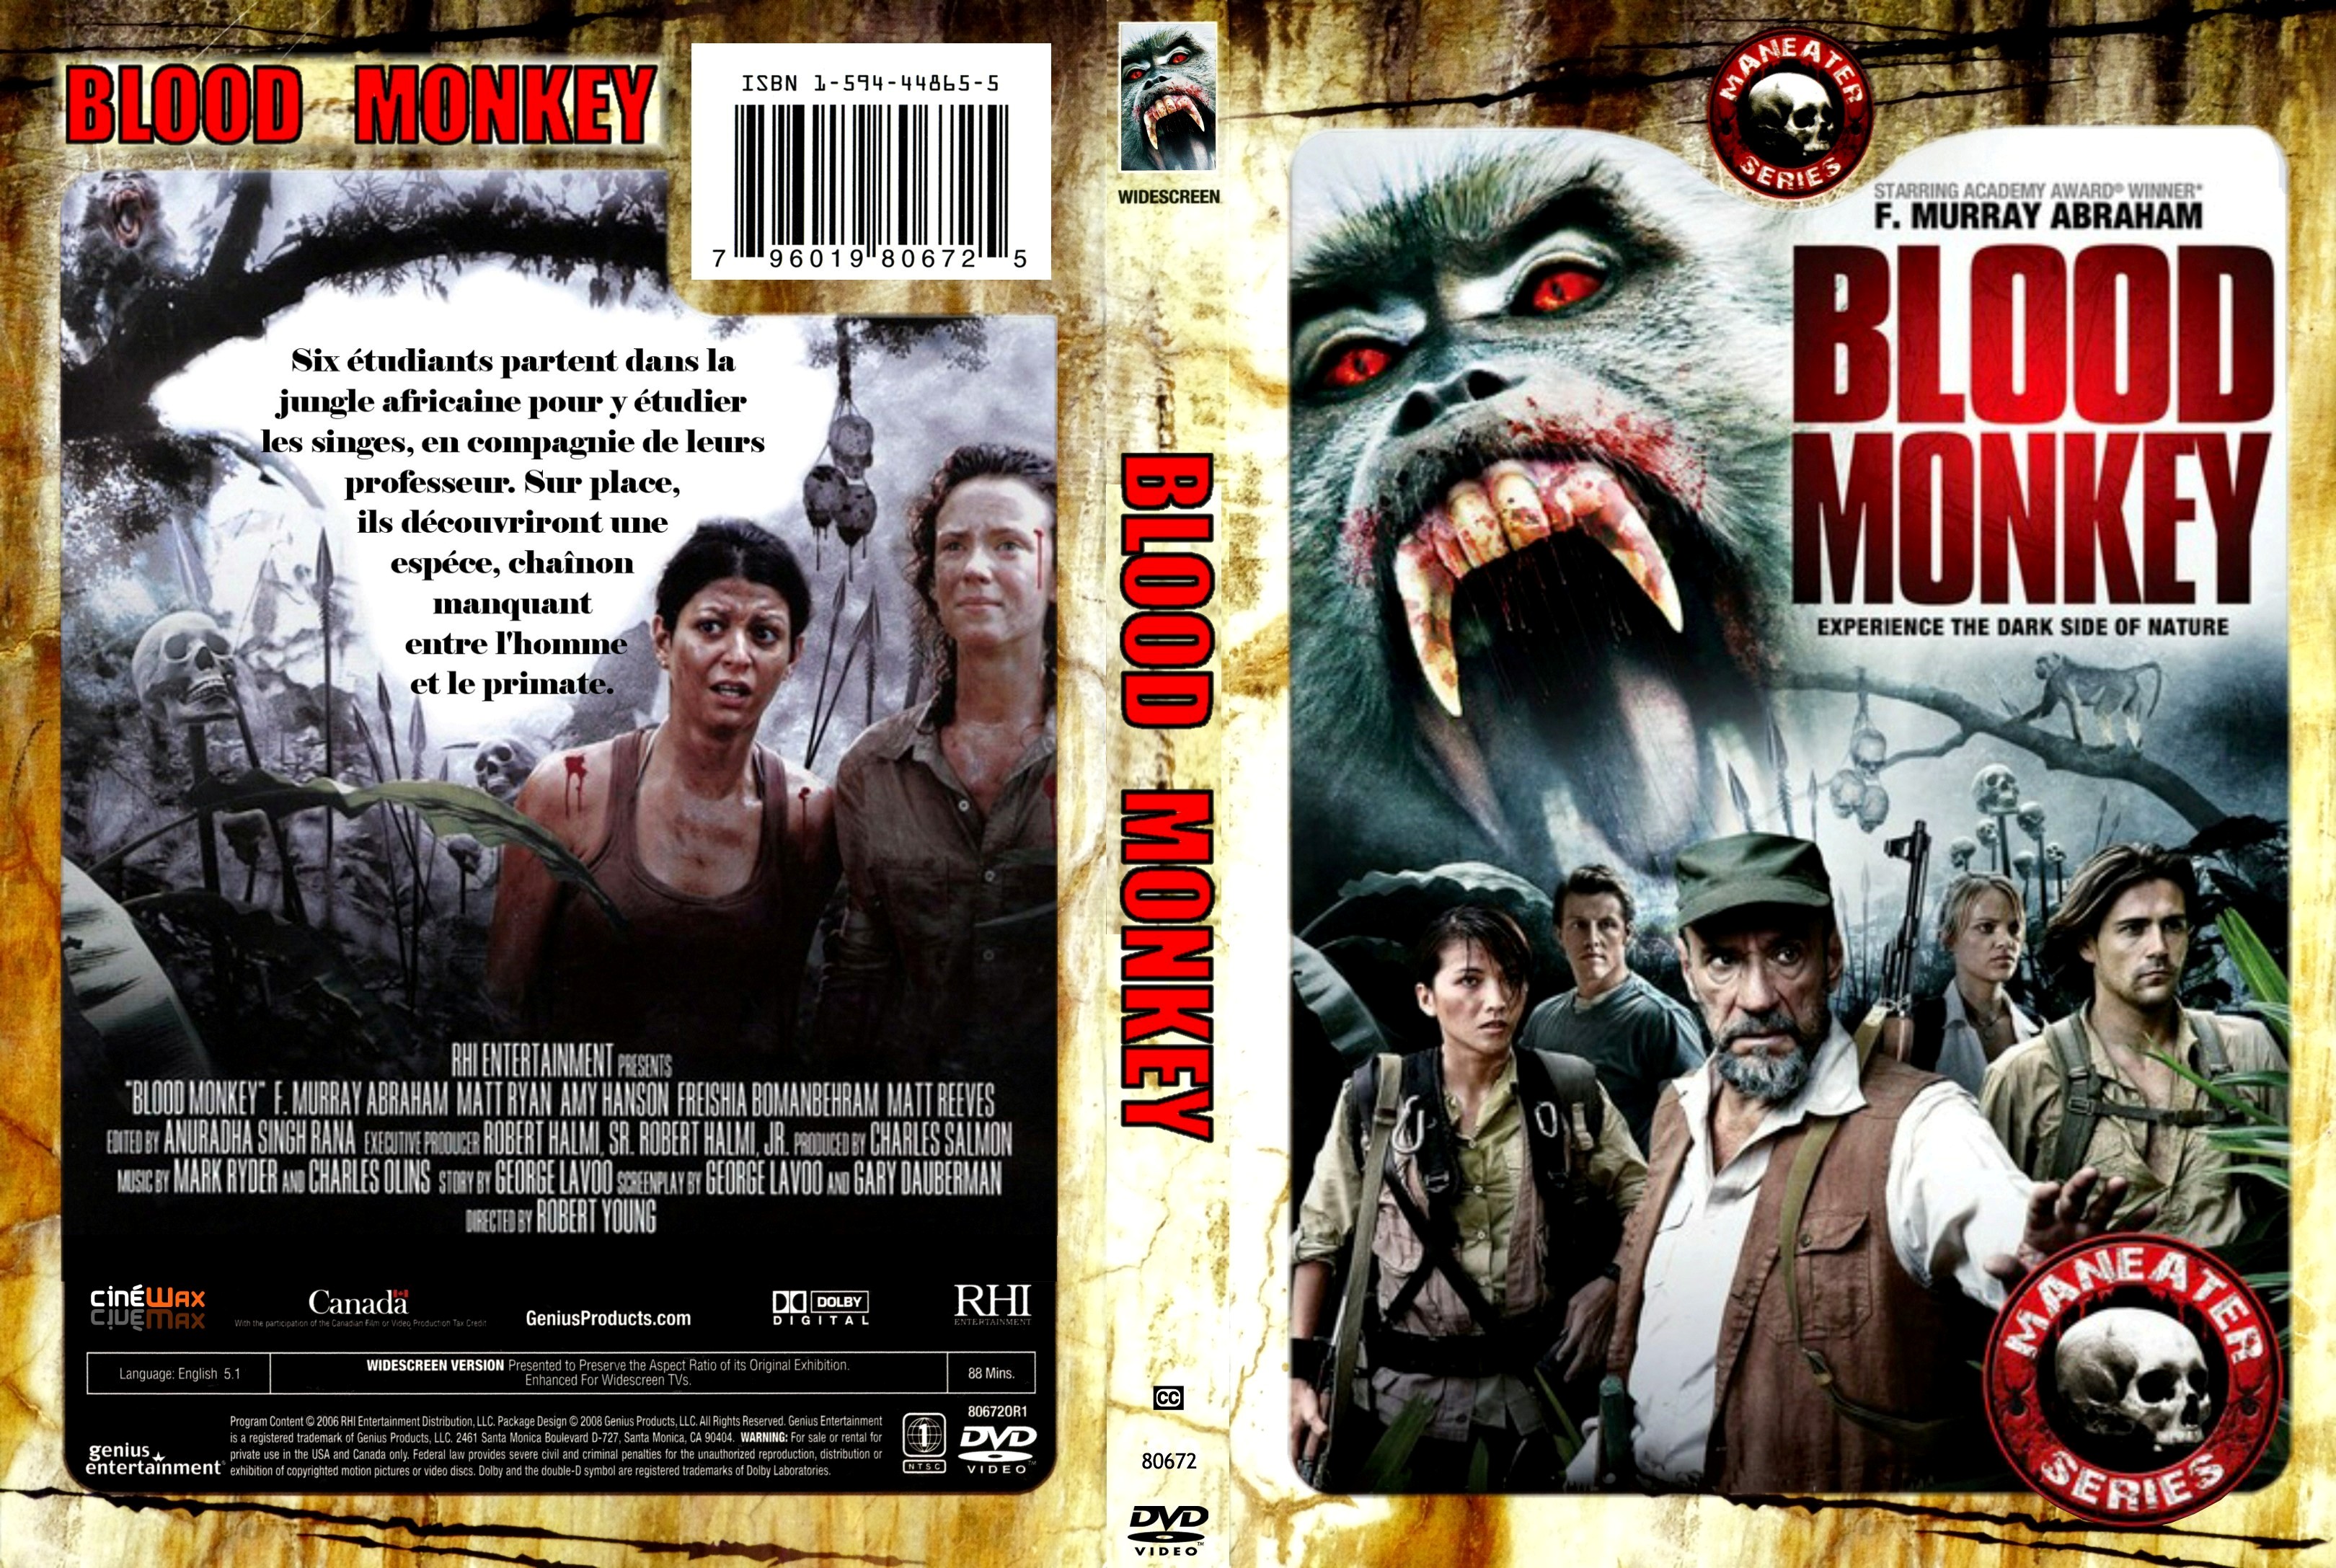 Jaquette DVD Blood monkey custom